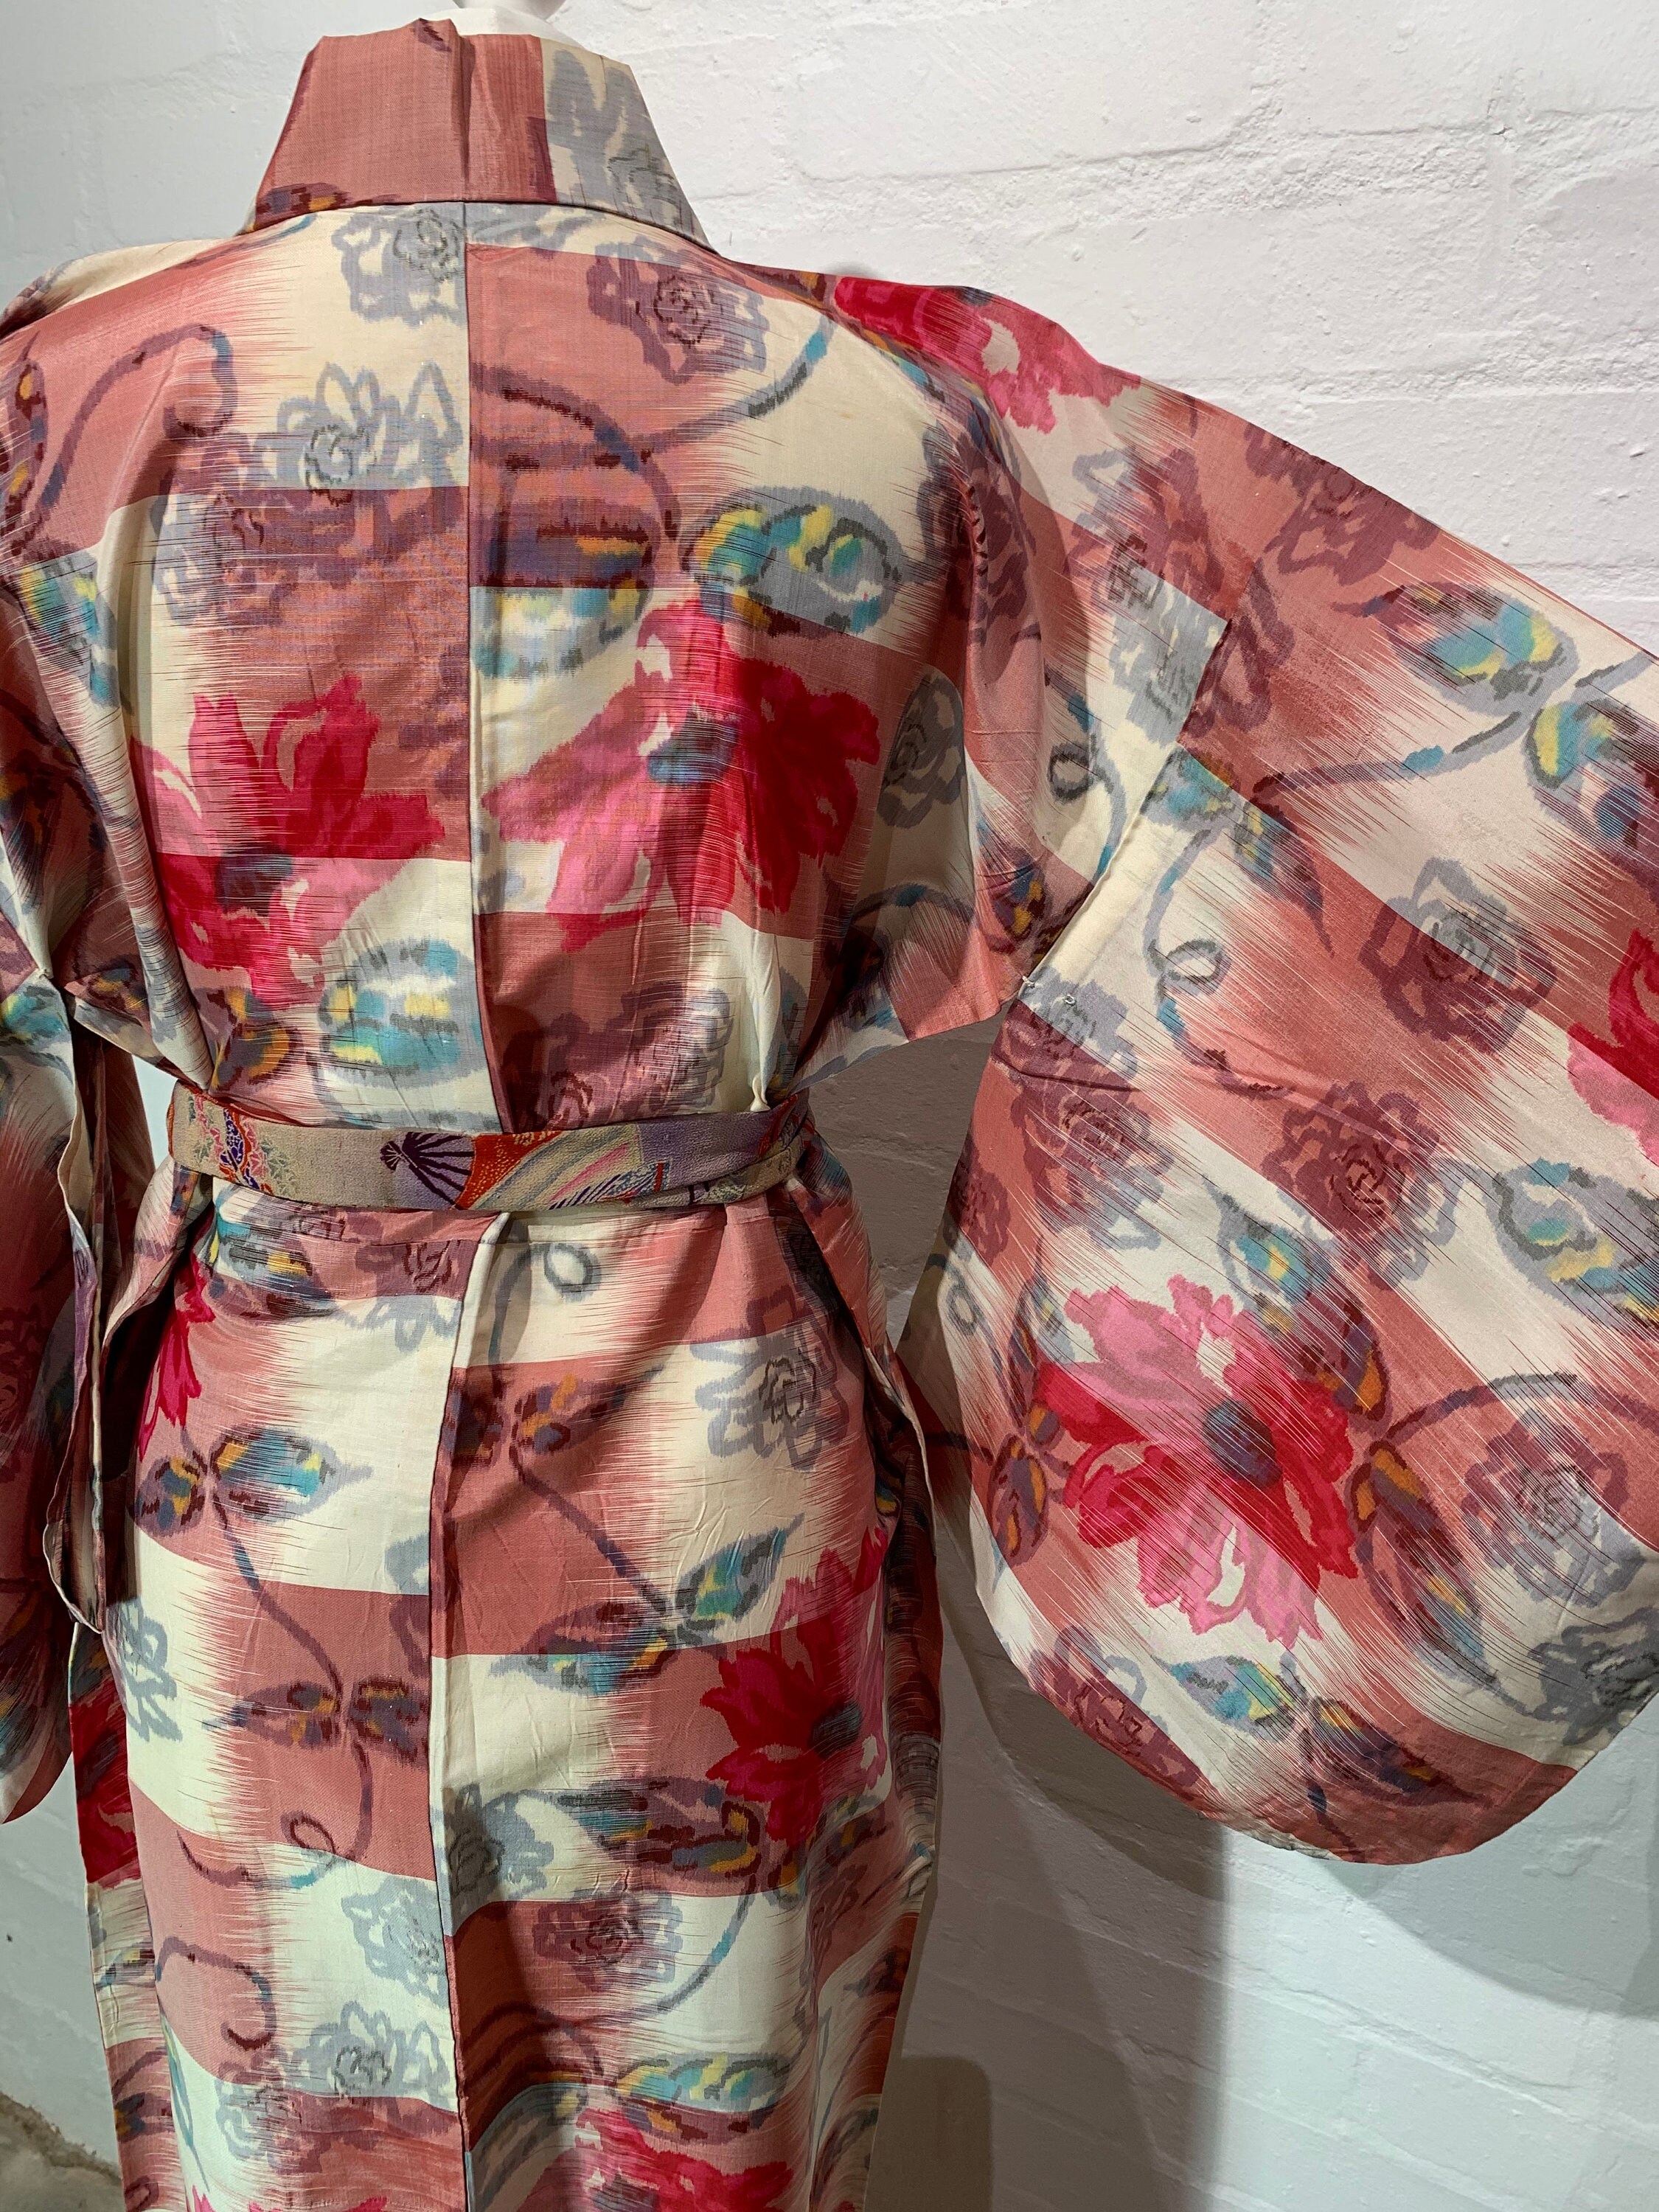 13/" x 56/" f-006 antique meisen silk kimono fabric leaves